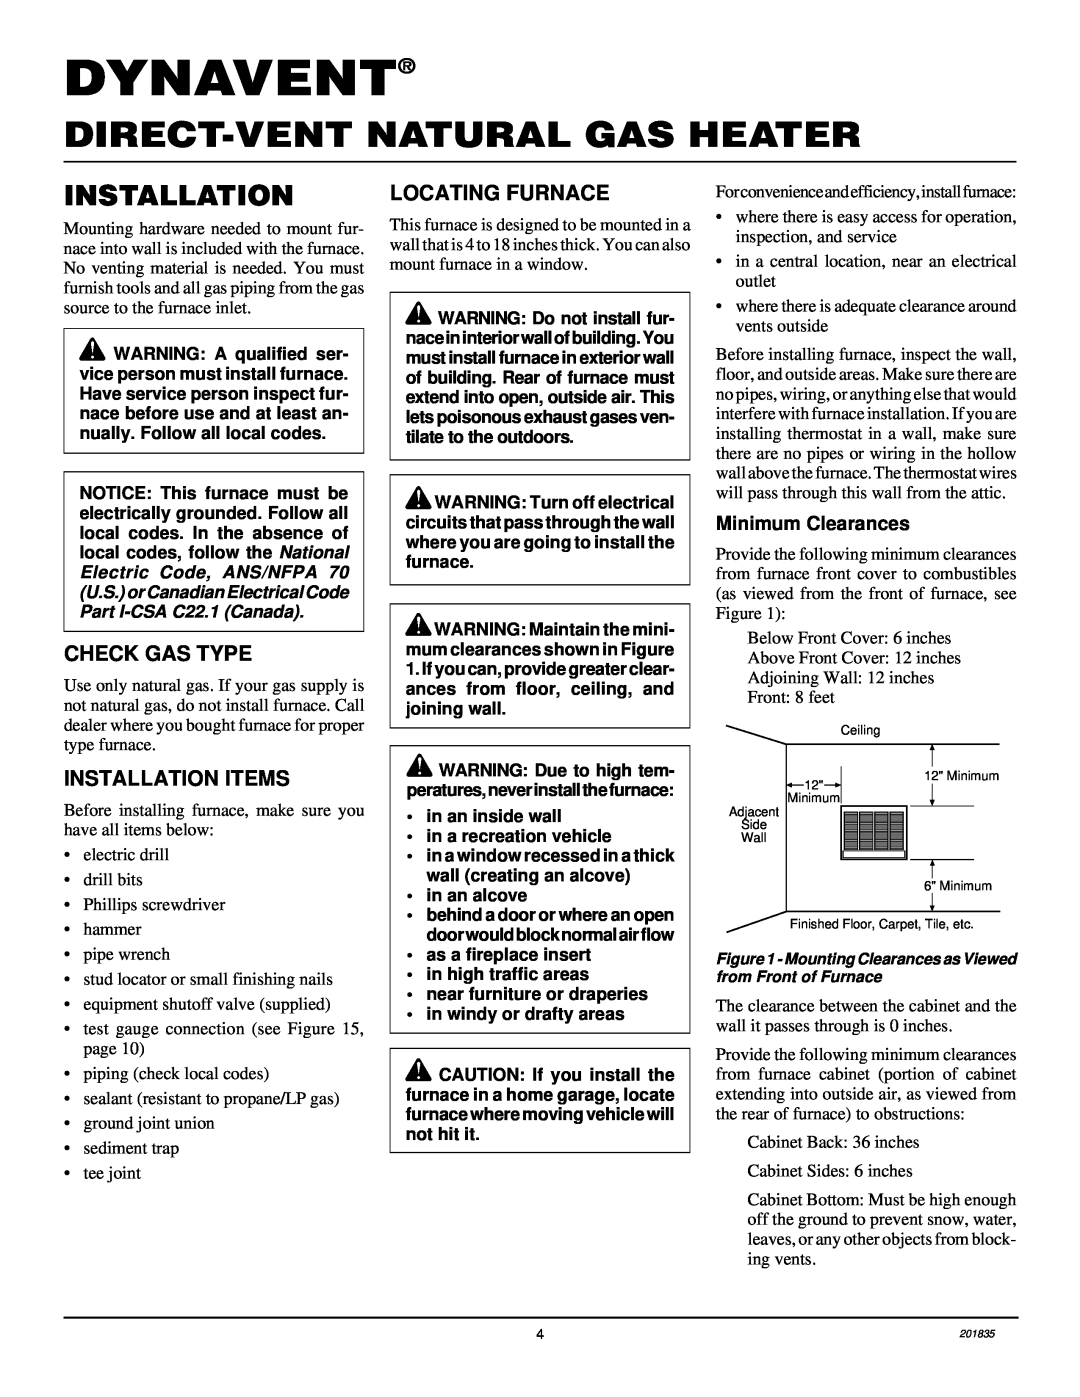 Desa DNV40NB, DNV25NB Dynavent, Direct-Ventnatural Gas Heater, Check Gas Type, Installation Items, Locating Furnace 